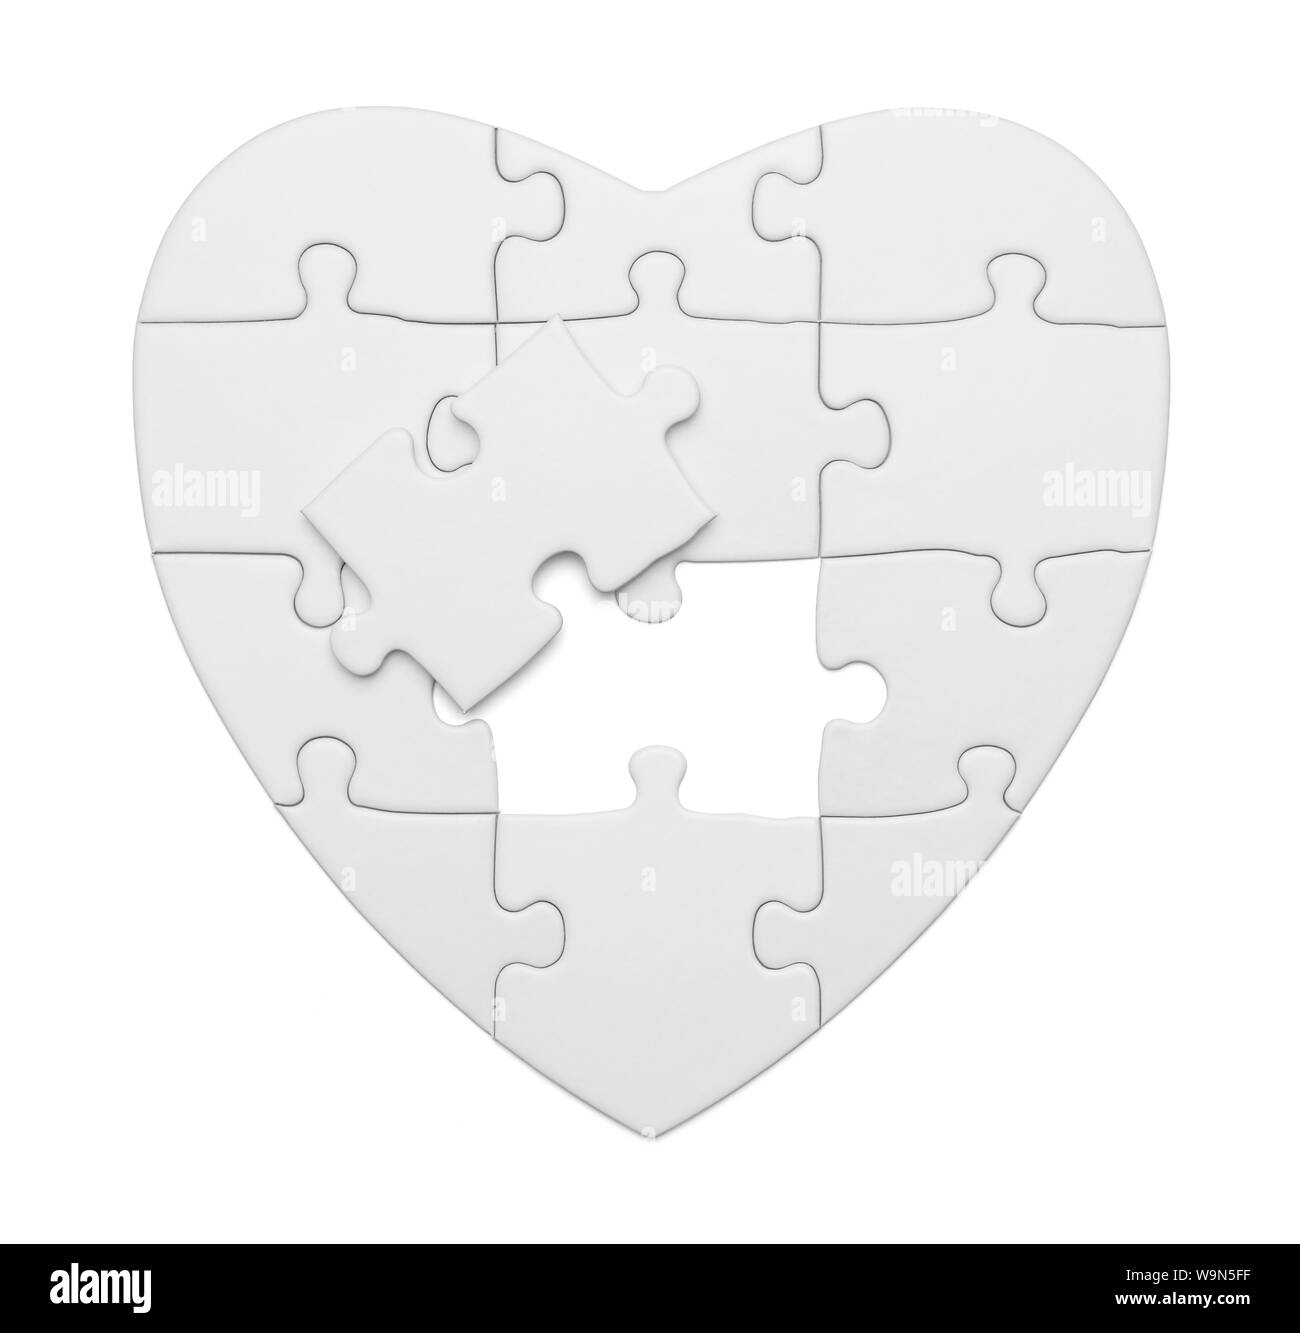 Blank Heart Puzzle Isolated on White Background. Stock Photo